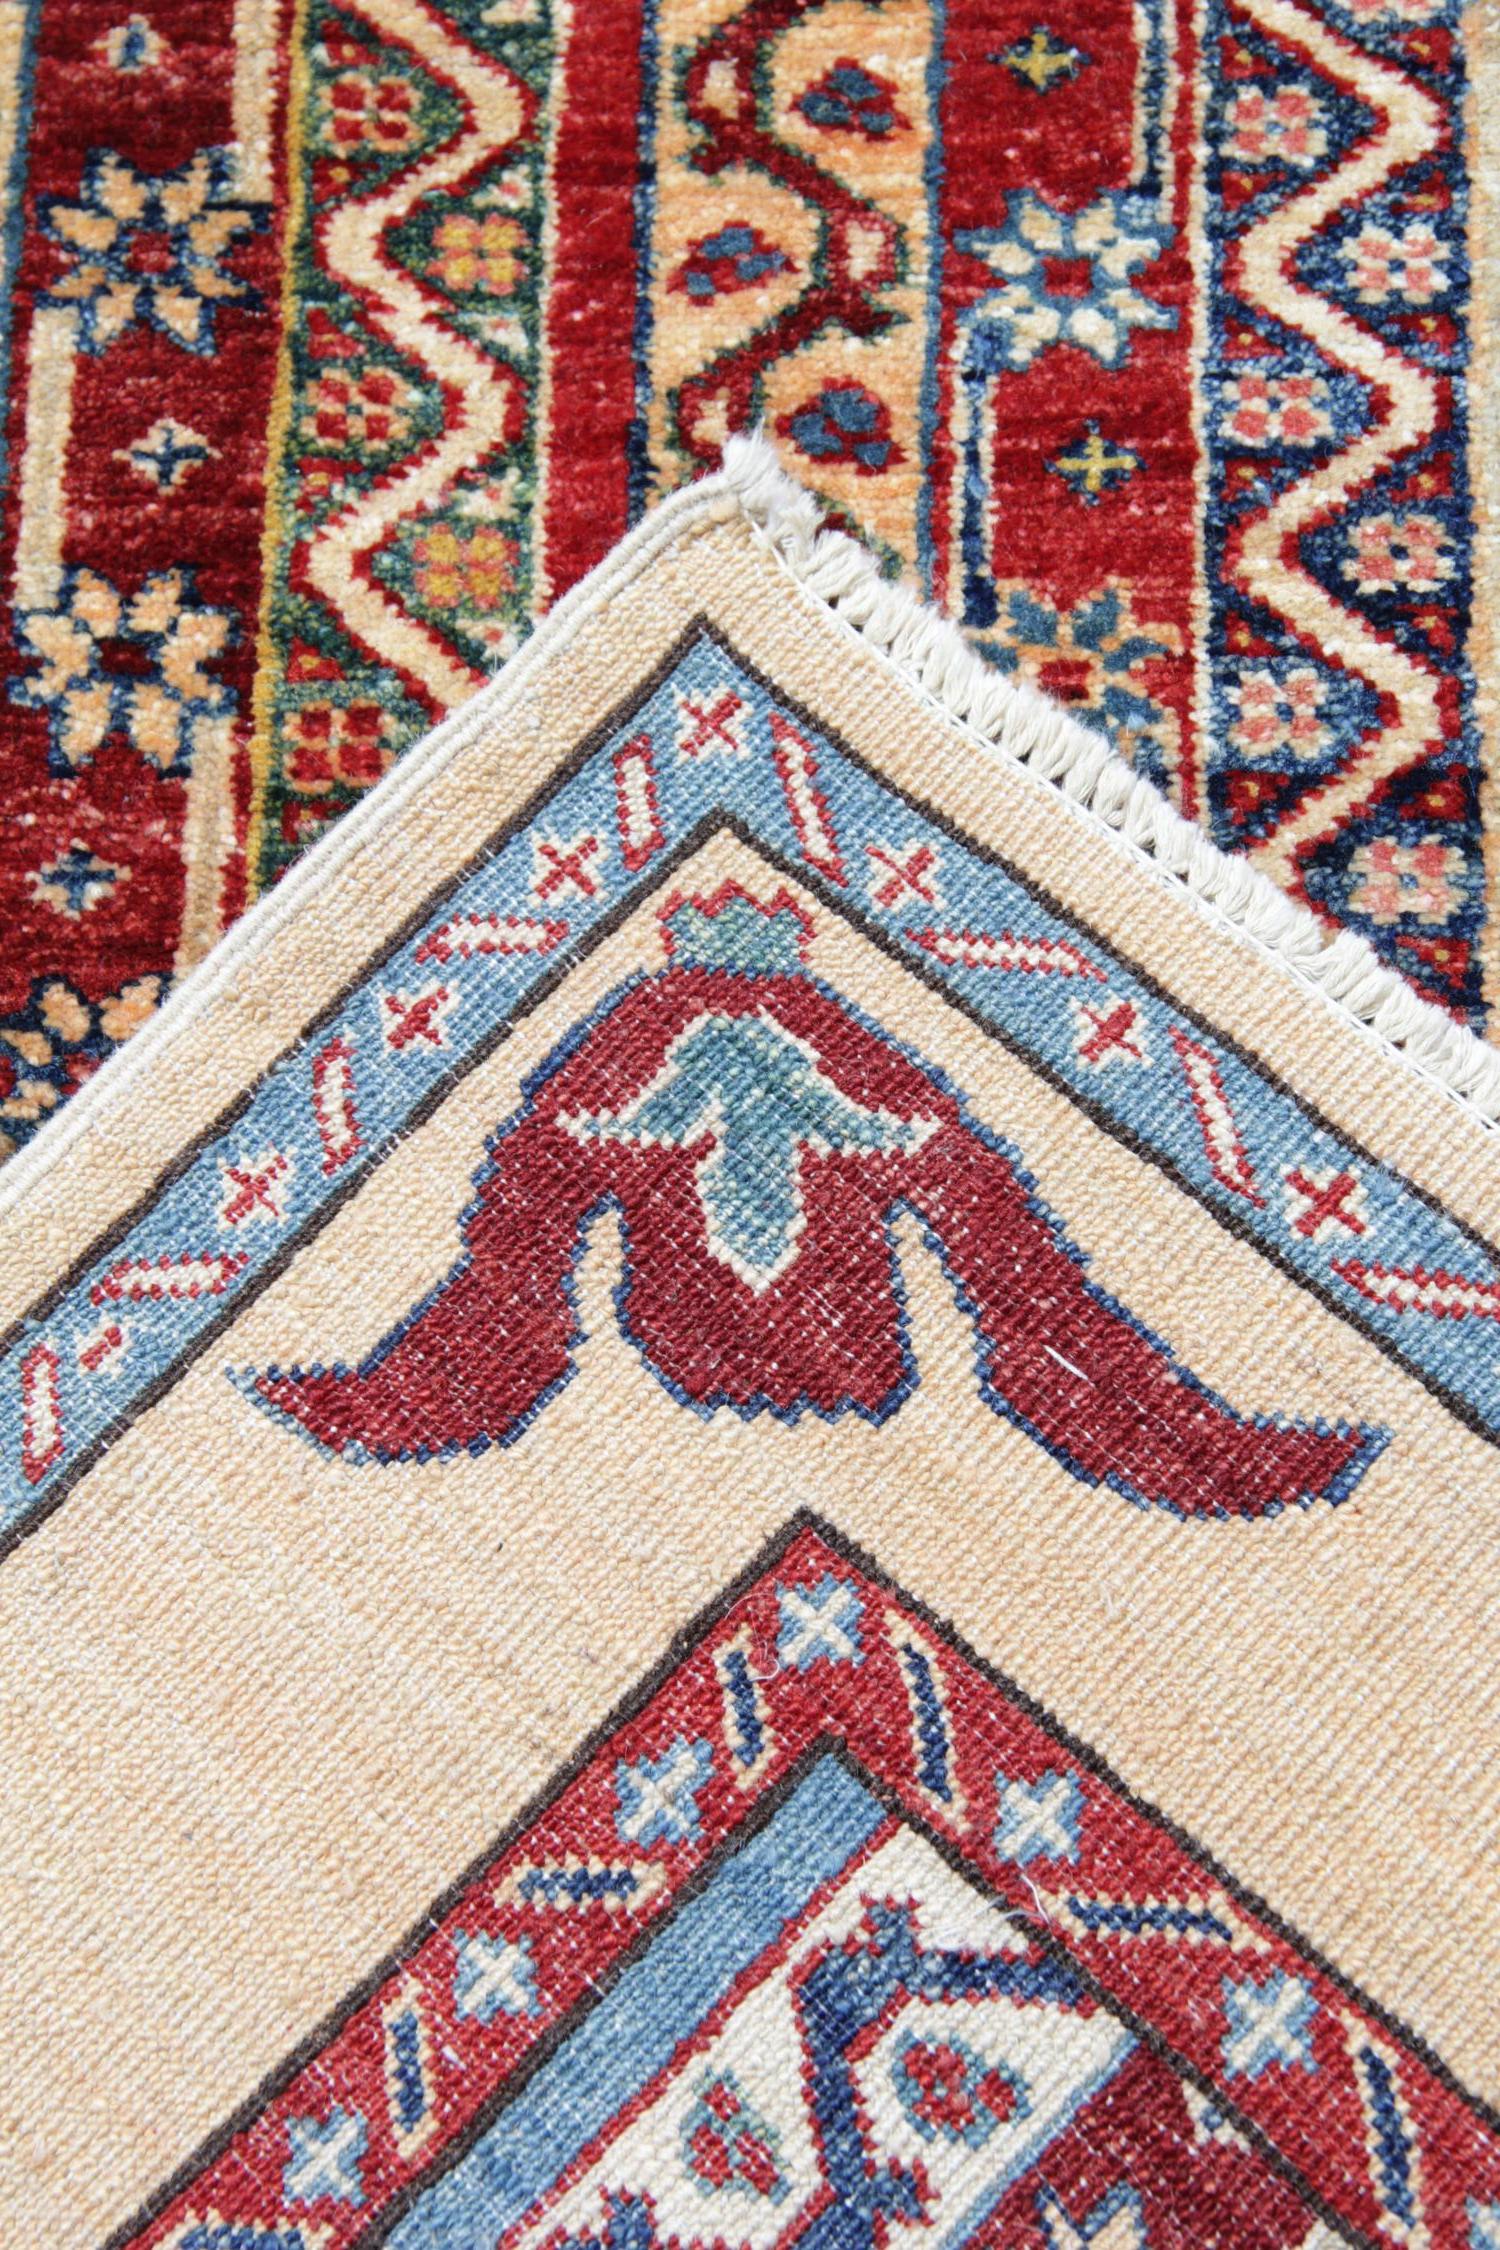 Hand-Crafted Handmade Runner Rug Traditional Kazak Carpet Rug Yellow Striped Runner For Sale